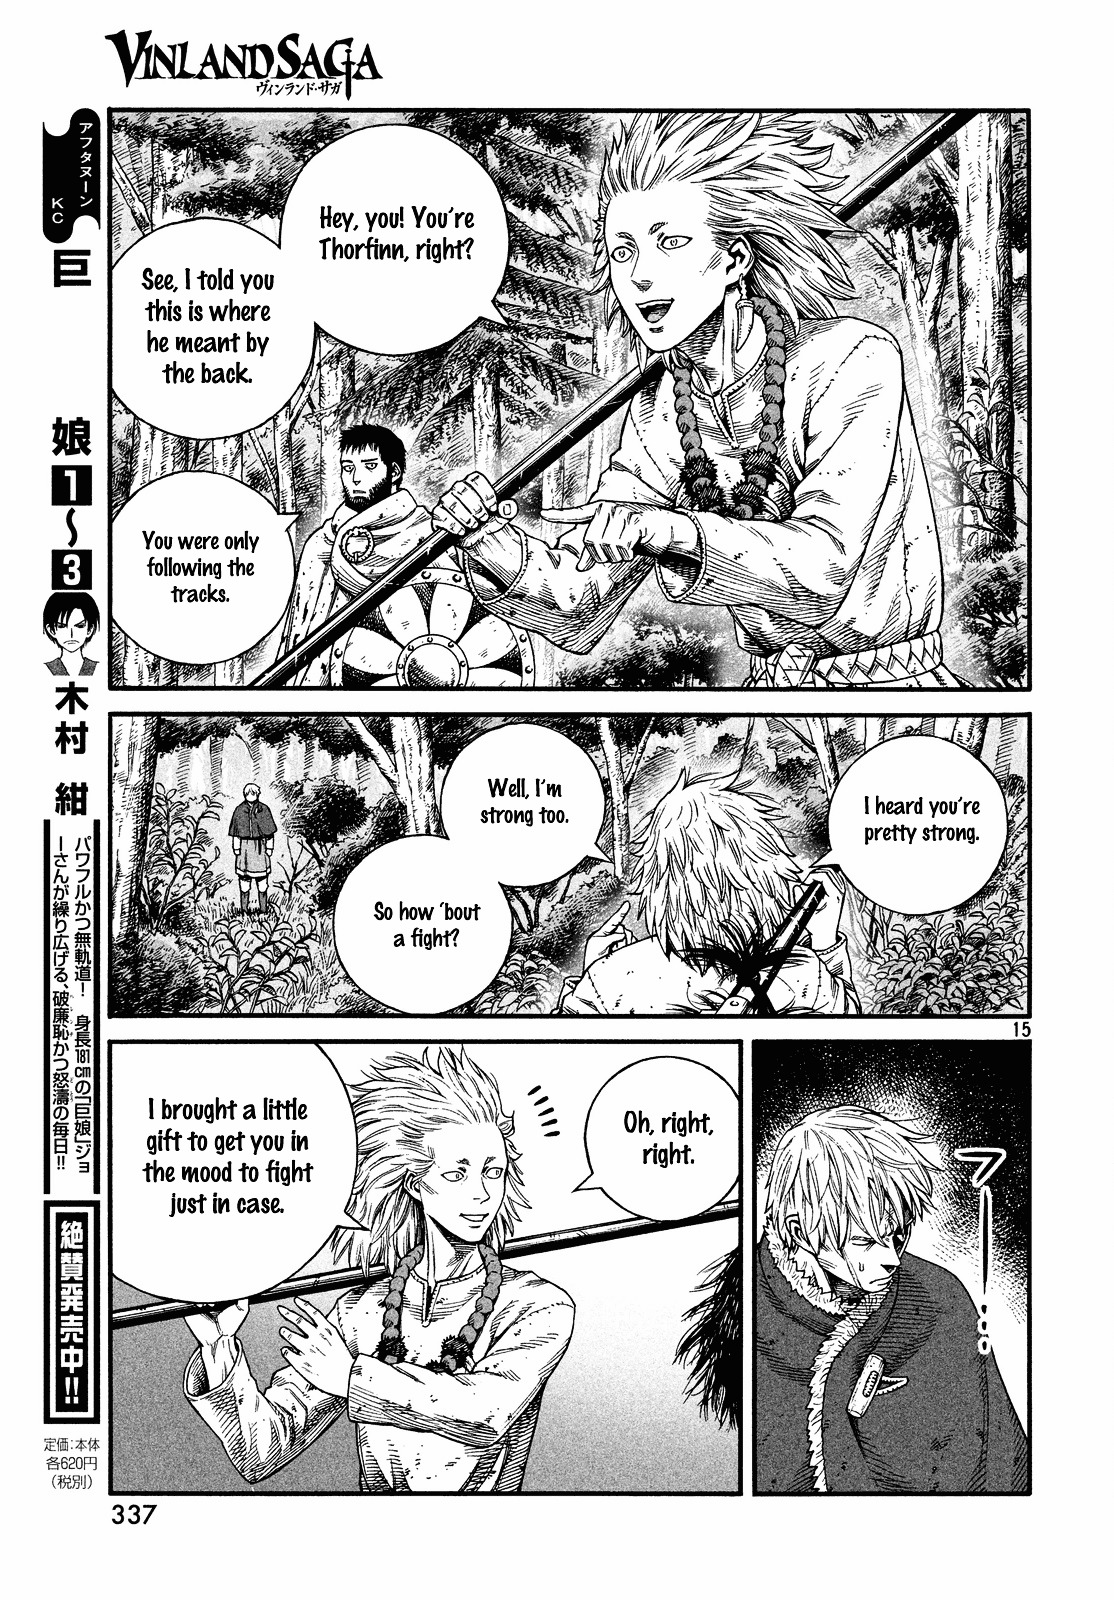 Vinland Saga Manga Manga Chapter - 134 - image 16